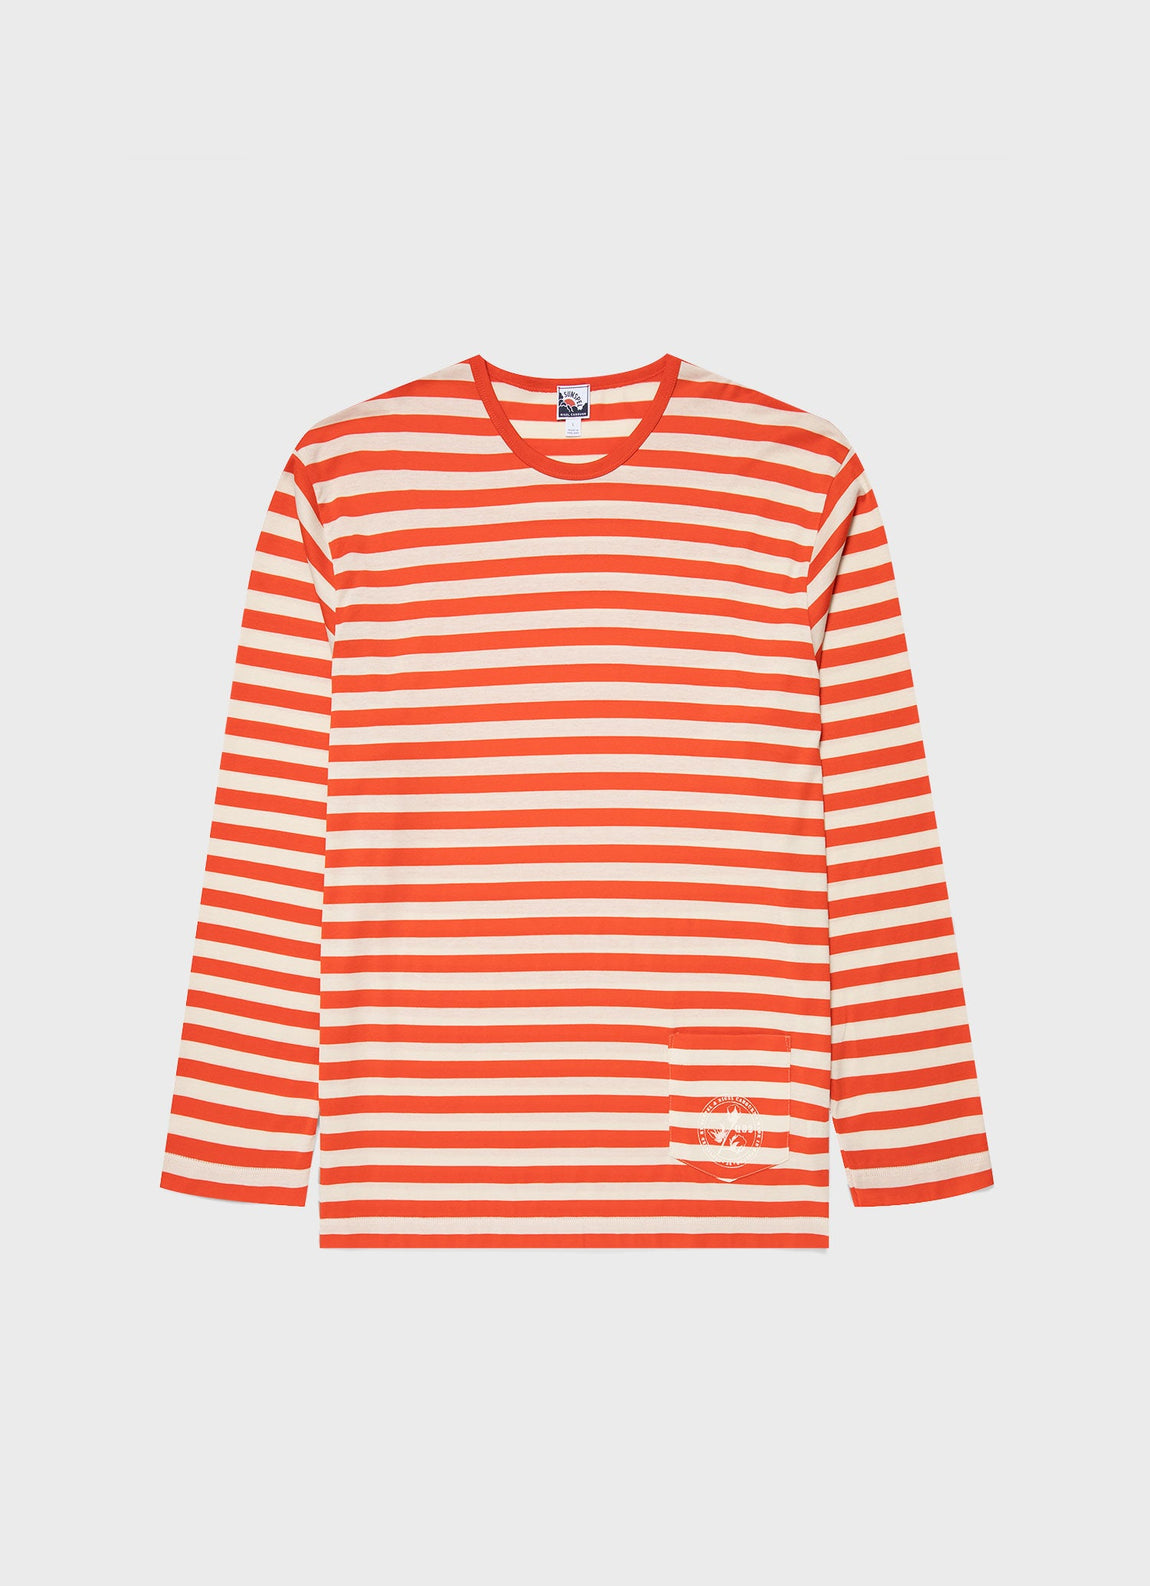 Men's Sunspel x Nigel Cabourn Long Sleeve T-shirt in Orange/Stone White